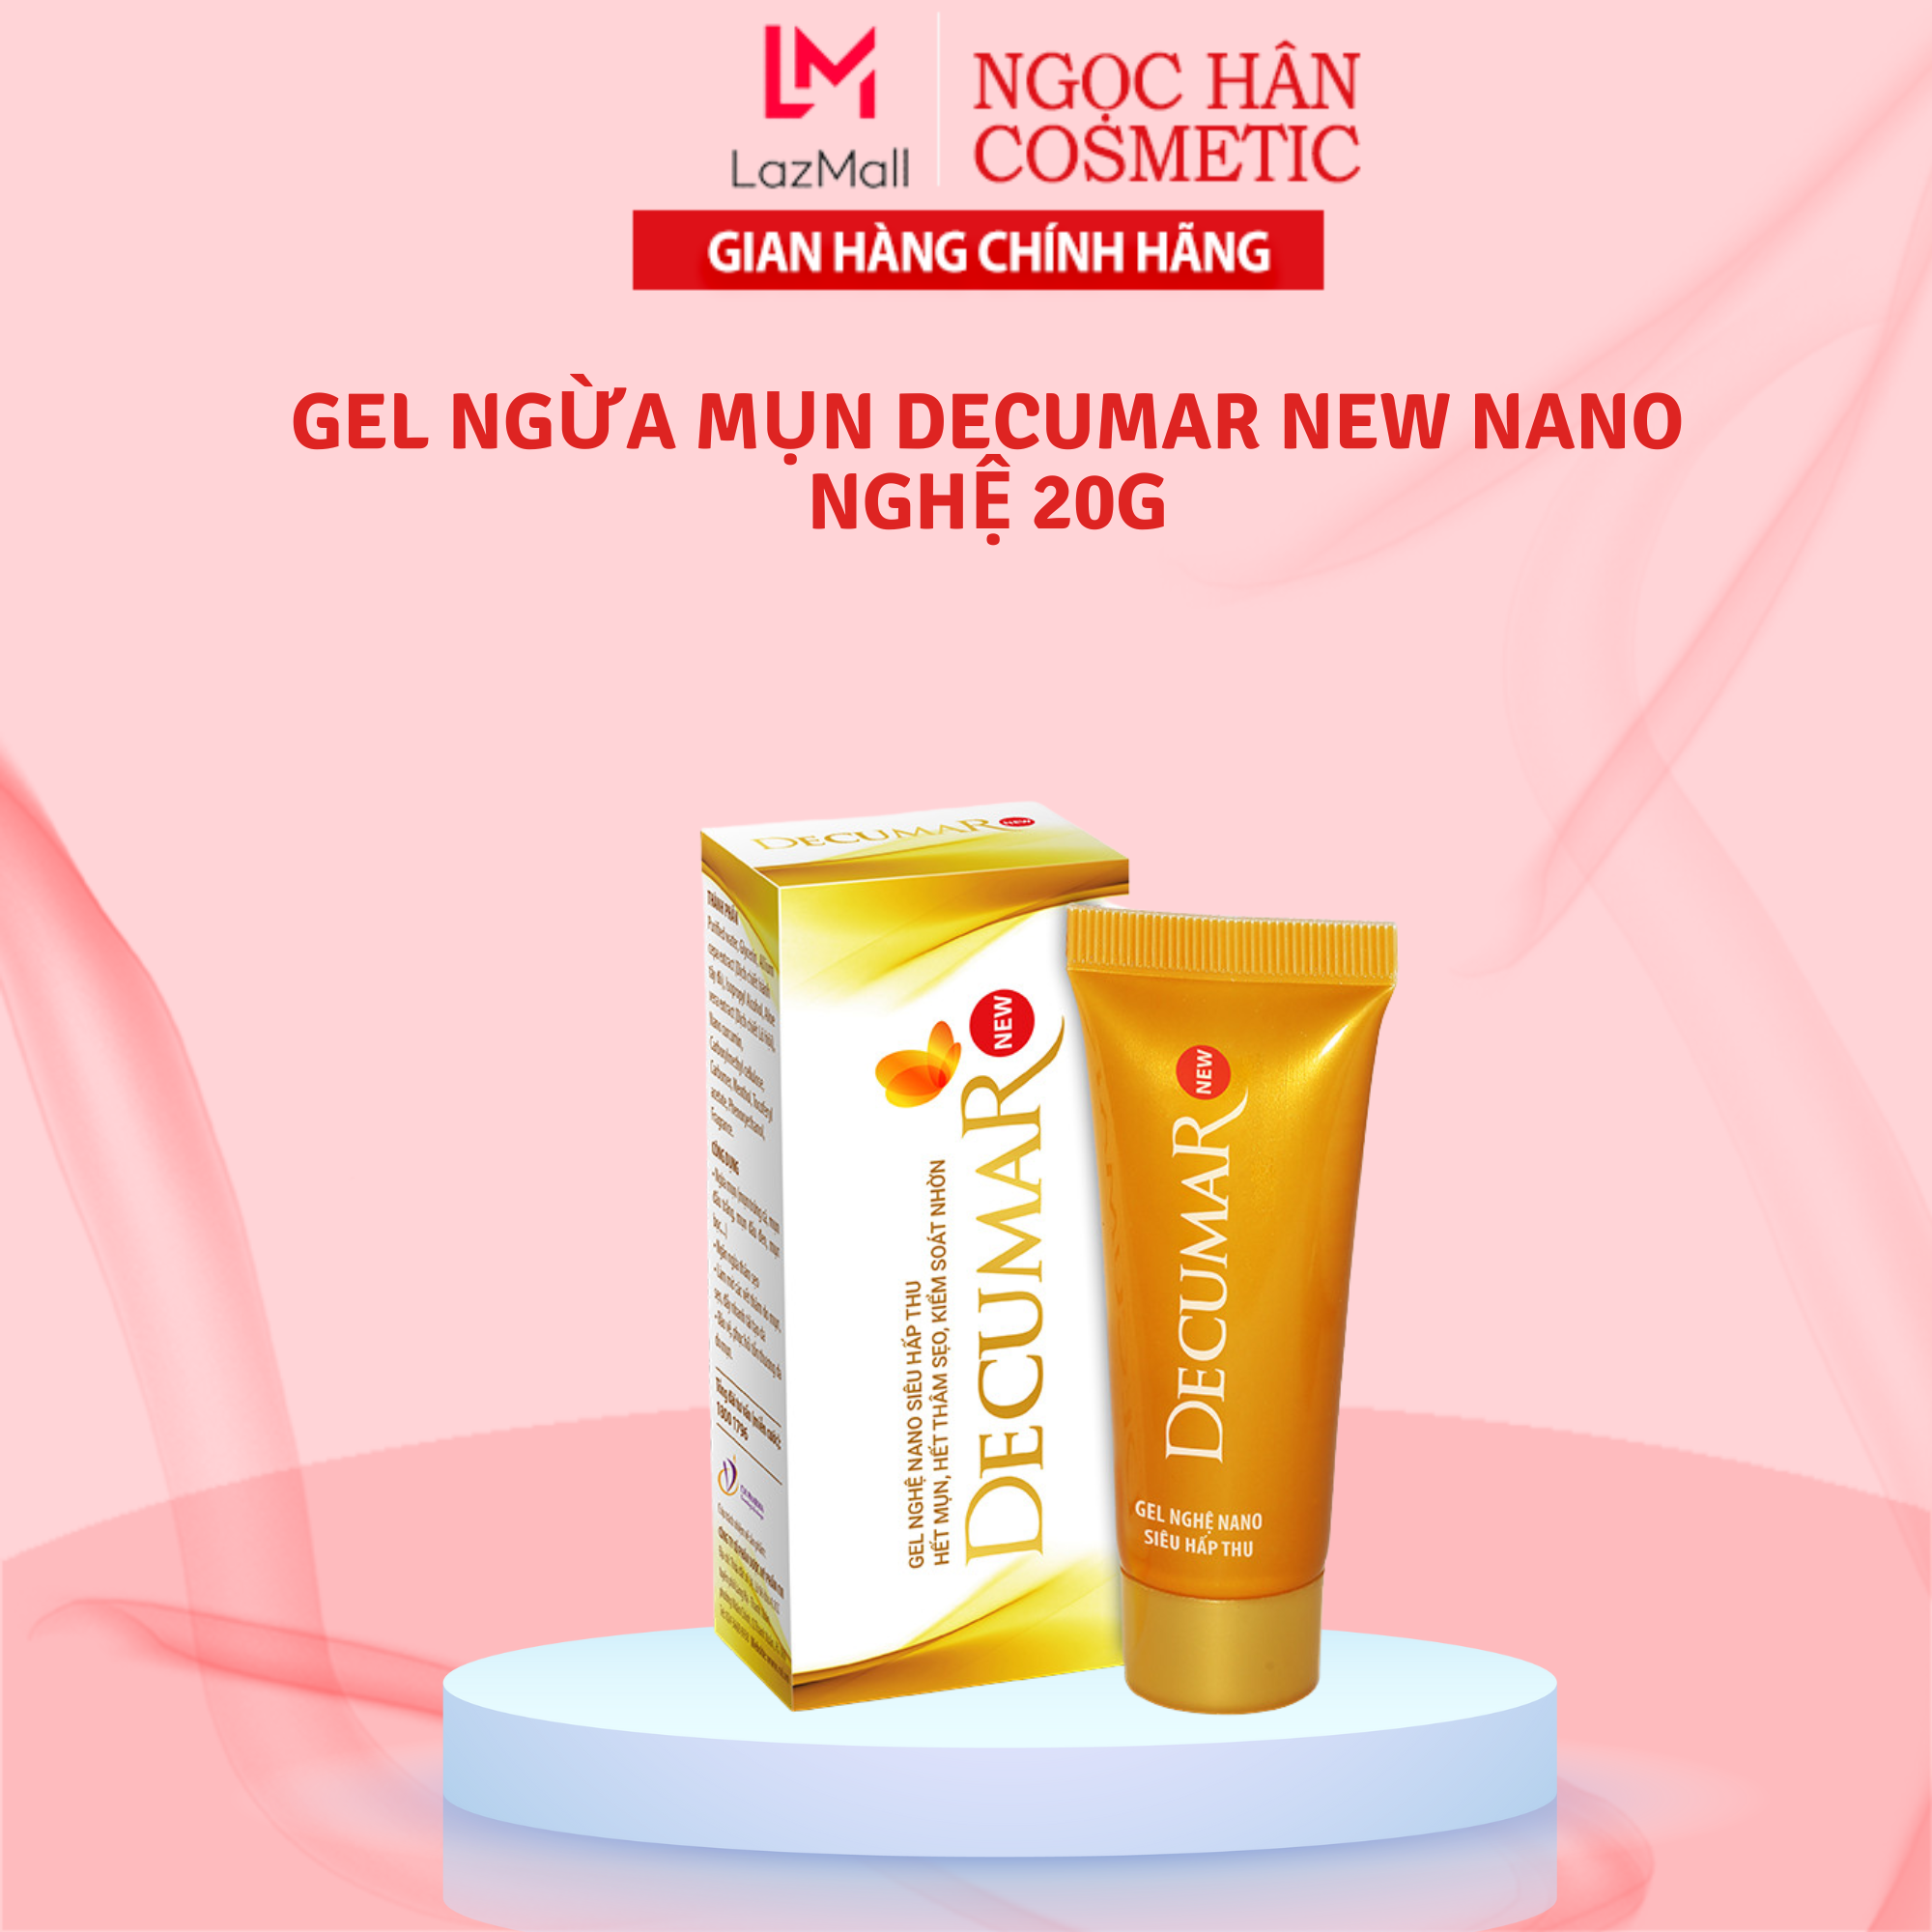 Gel ngừa mụn Decumar New Nano Nghệ 20g - Ngochan Cosmetics